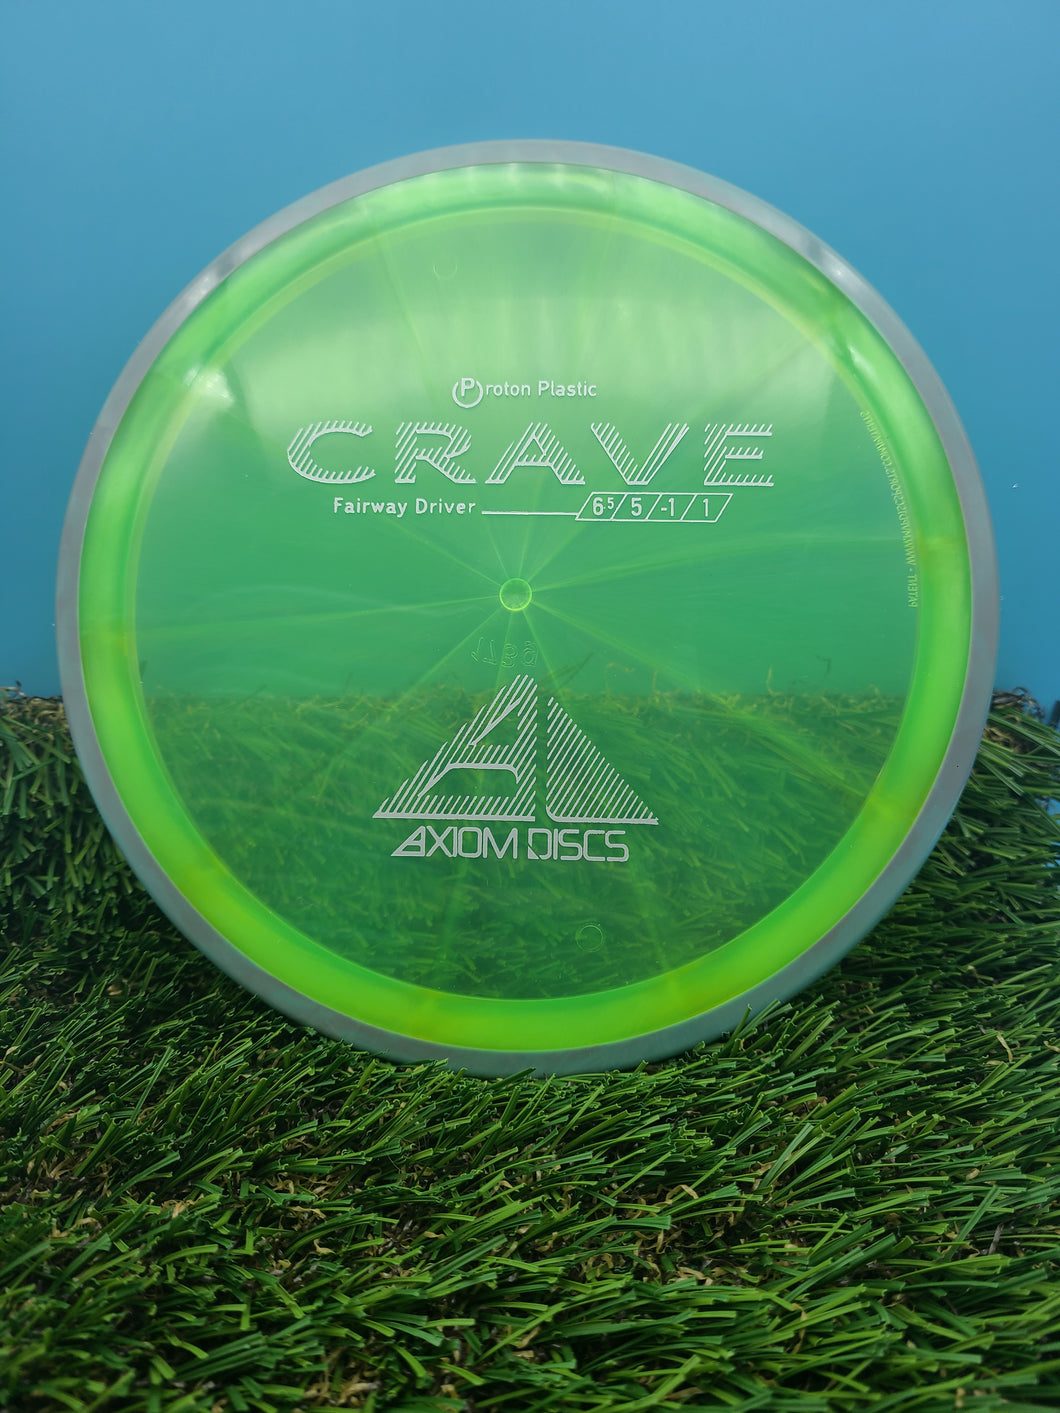 Axiom Crave Proton Plastic Fairway Driver